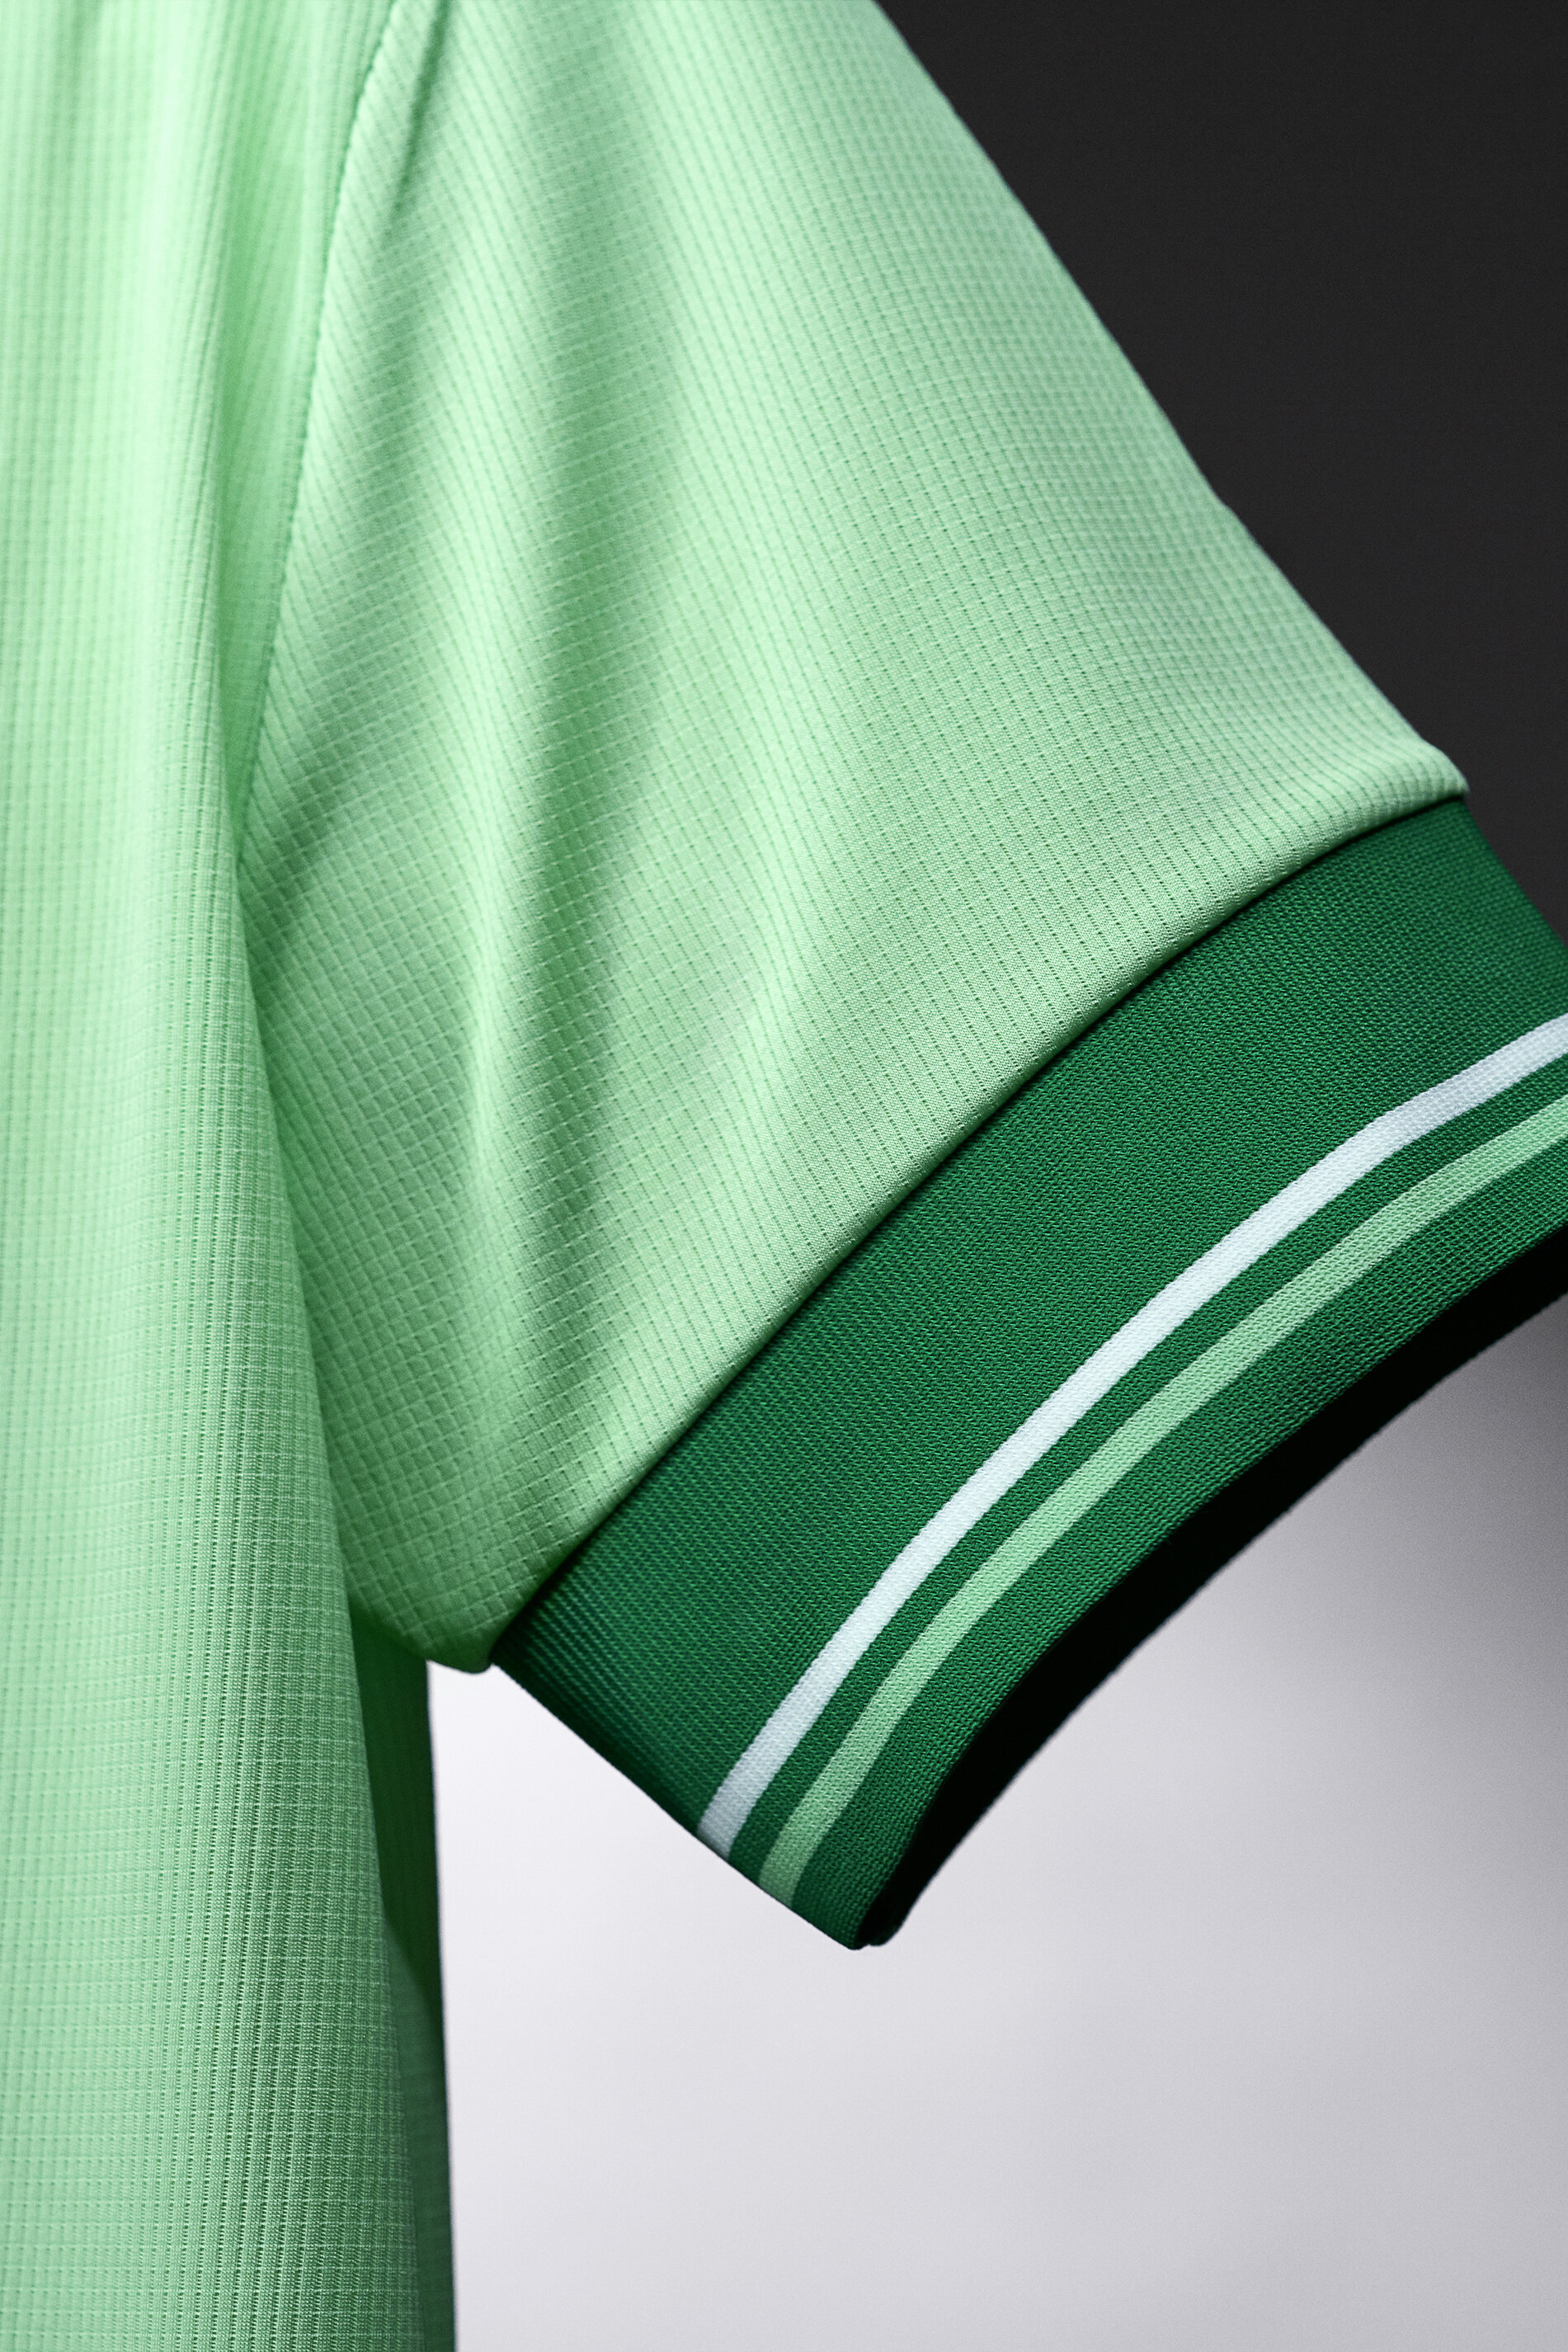 Rekutt — Adidas x Celtic FC Training Kit Launch 2020